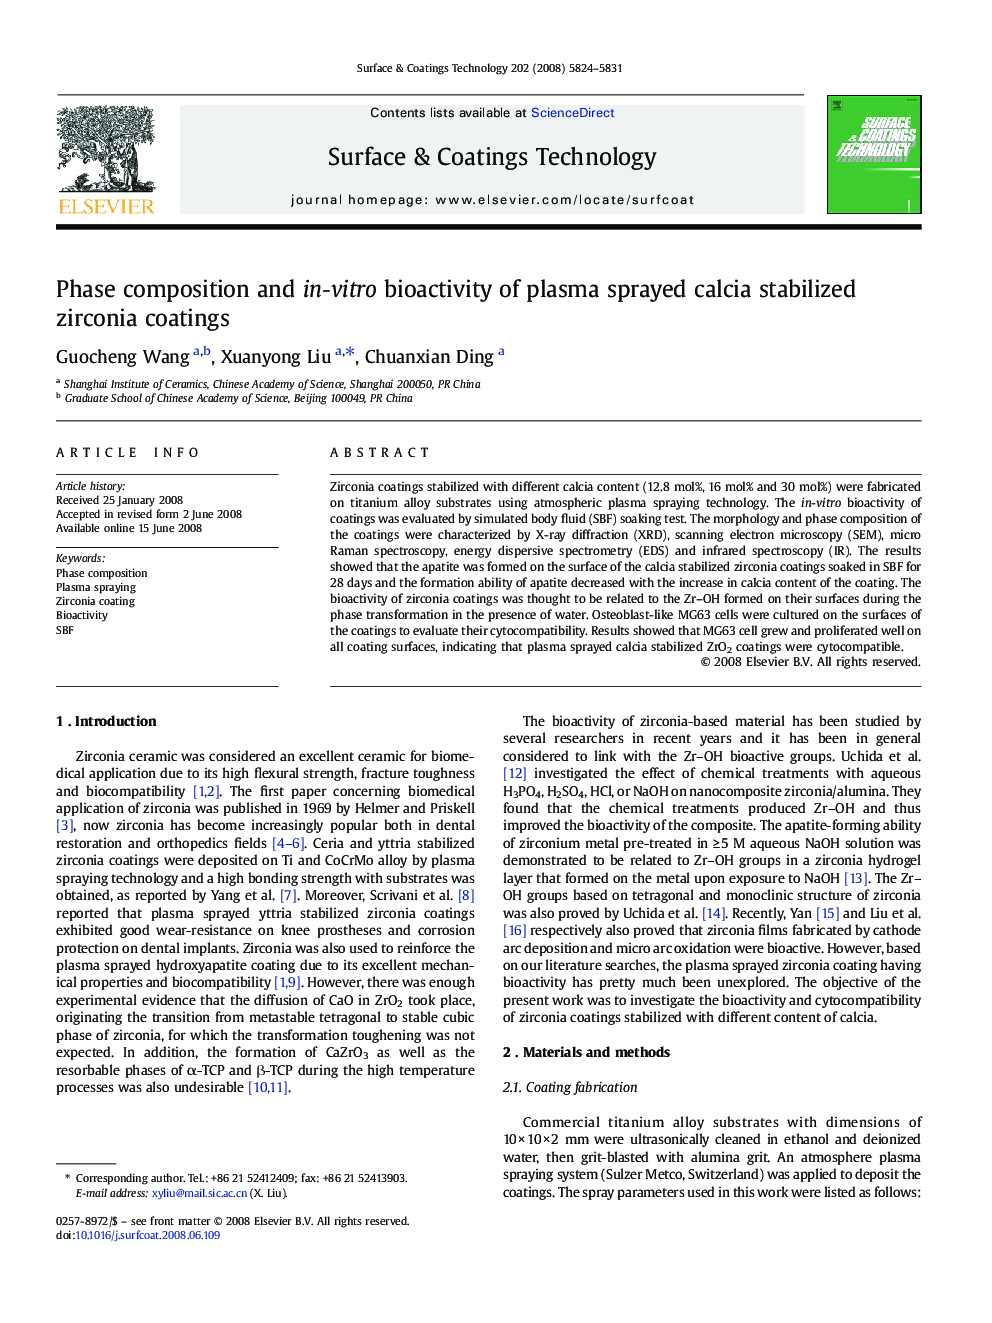 Phase composition and in-vitro bioactivity of plasma sprayed calcia stabilized zirconia coatings